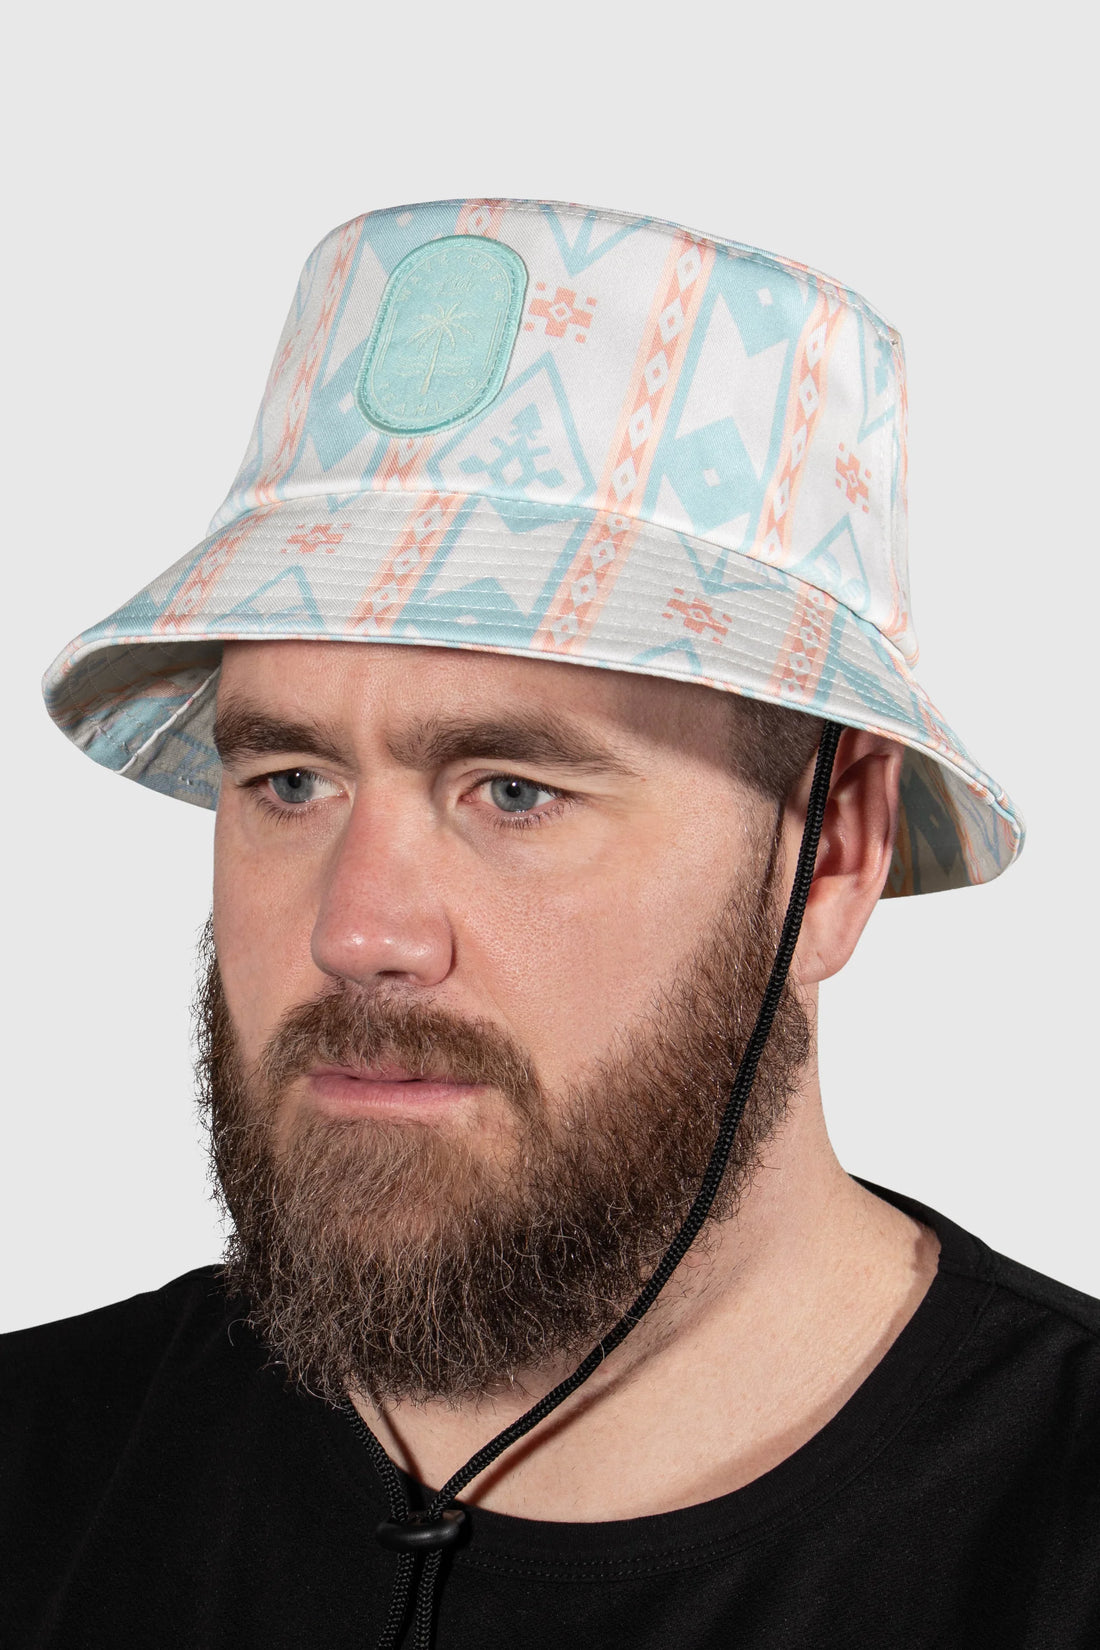 Bucket Hats, TEAMLTD